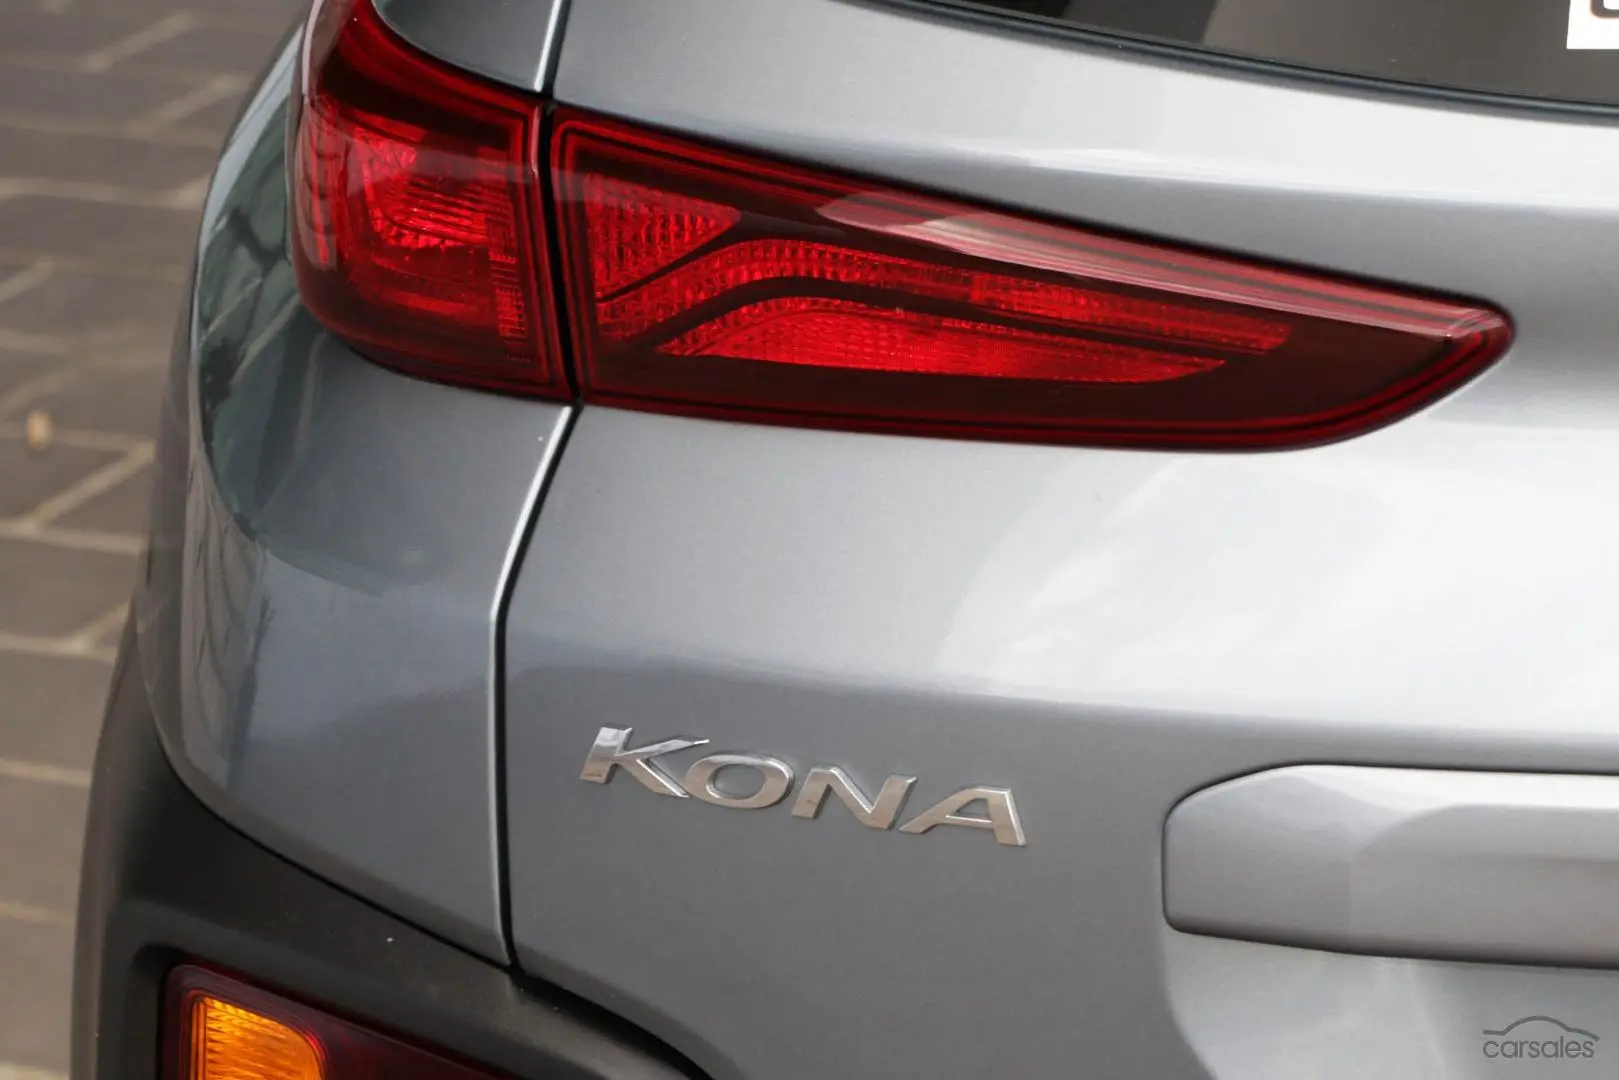 2019 Hyundai Kona Image 21